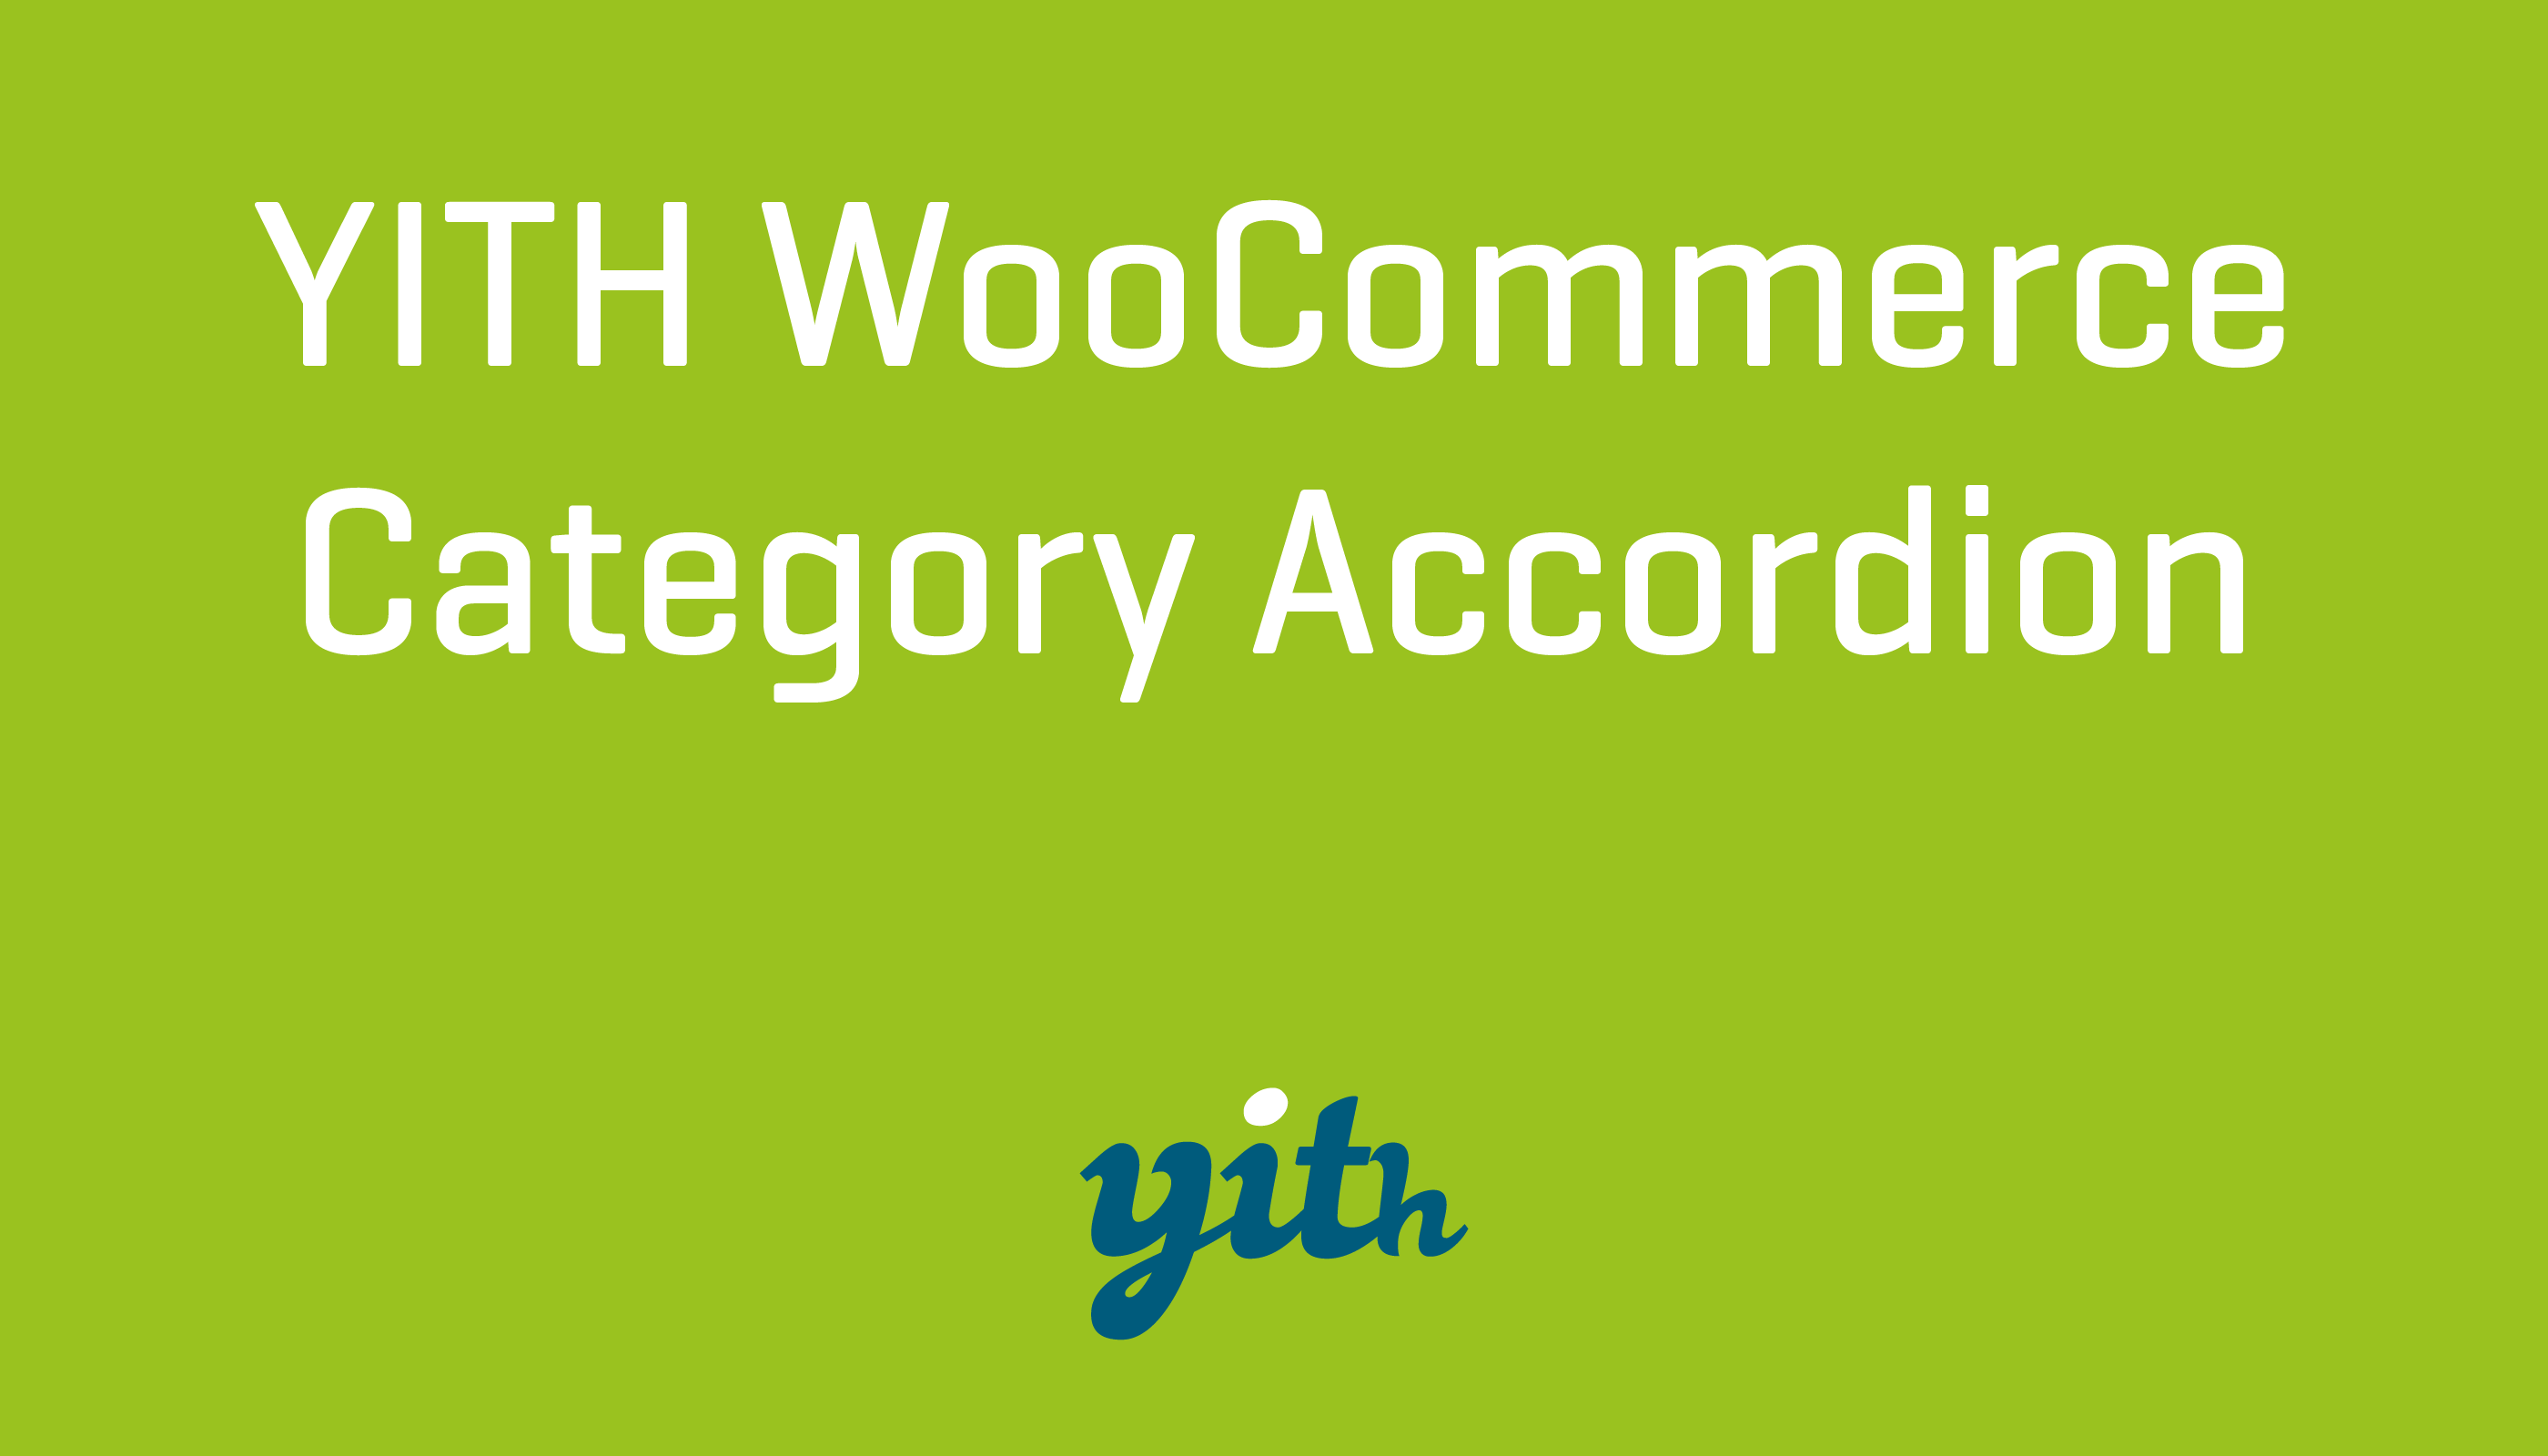 YITH WooCommerce Category Accordion